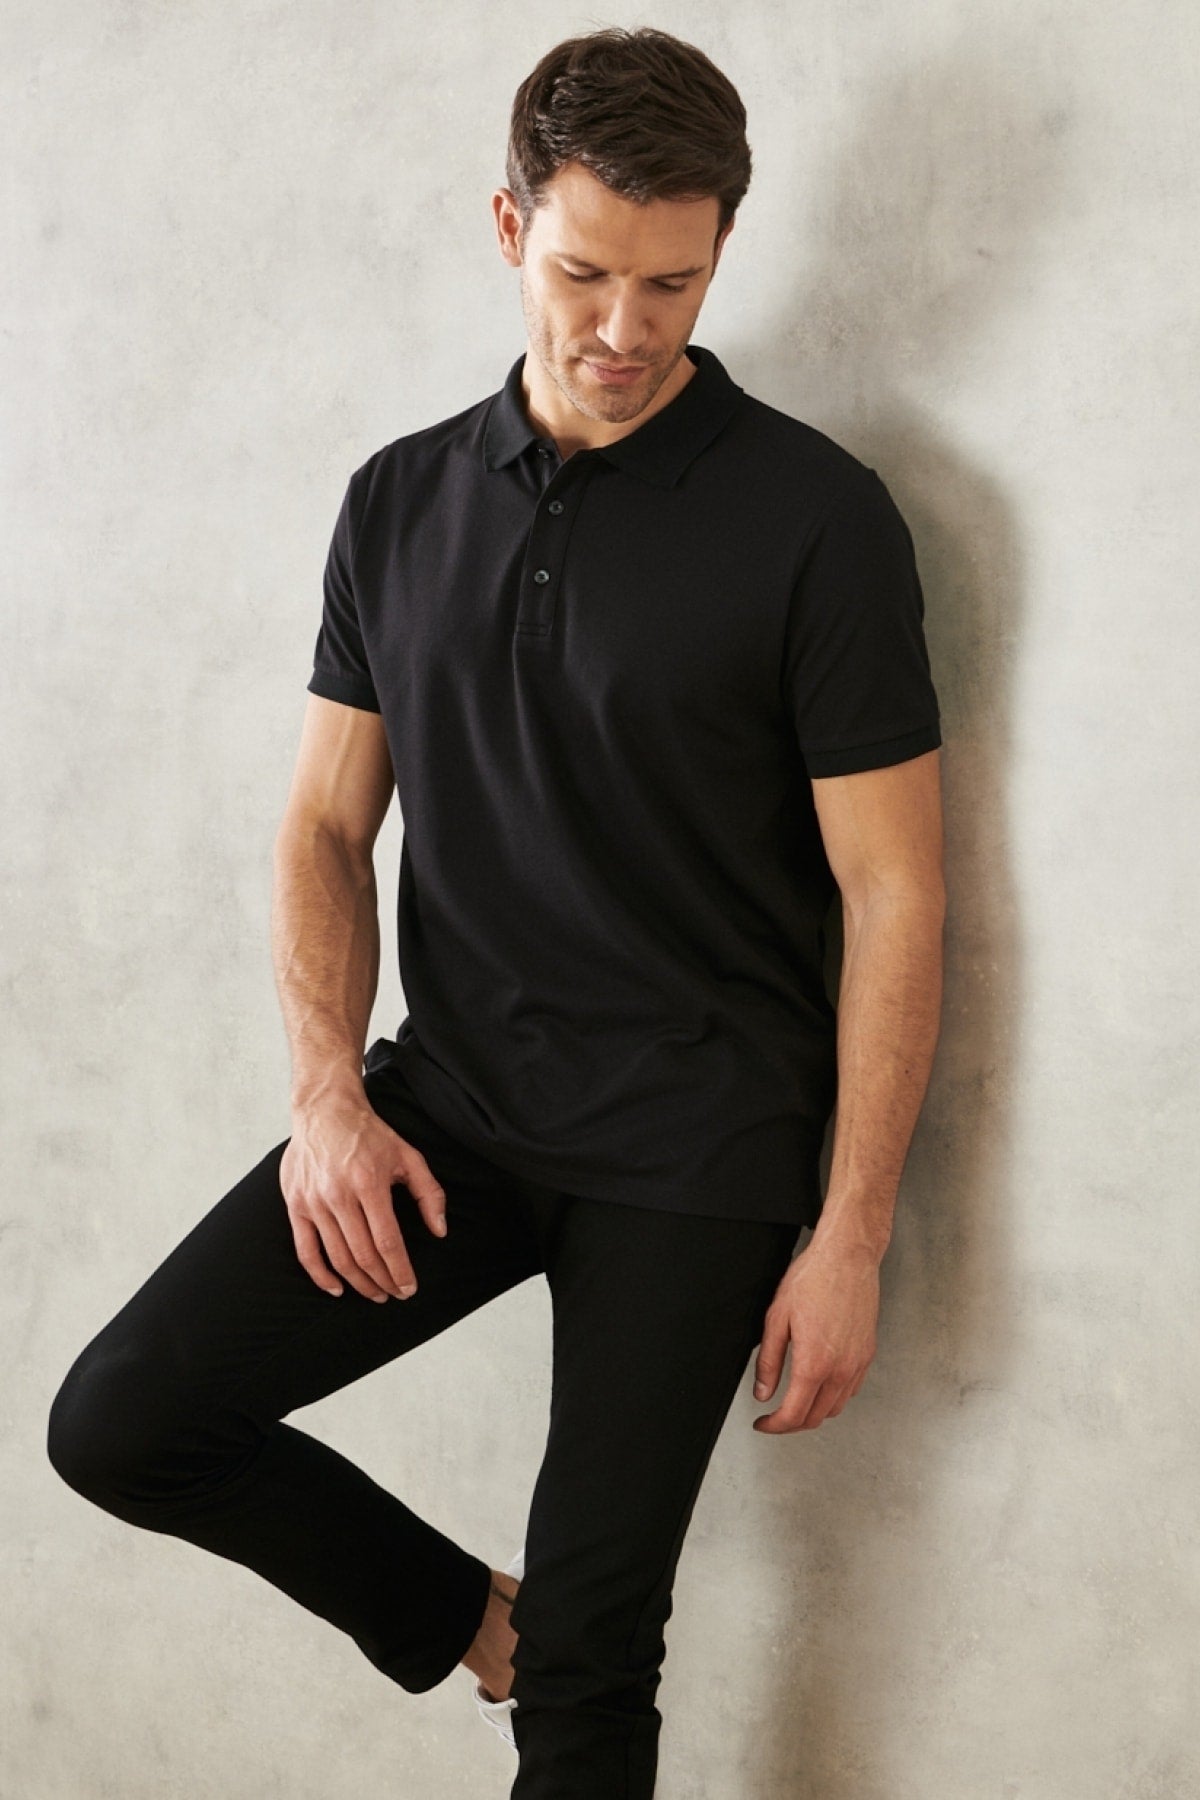 Men's Non-Shrink Cotton Fabric Slim Fit Slim Fit Black T-shirt